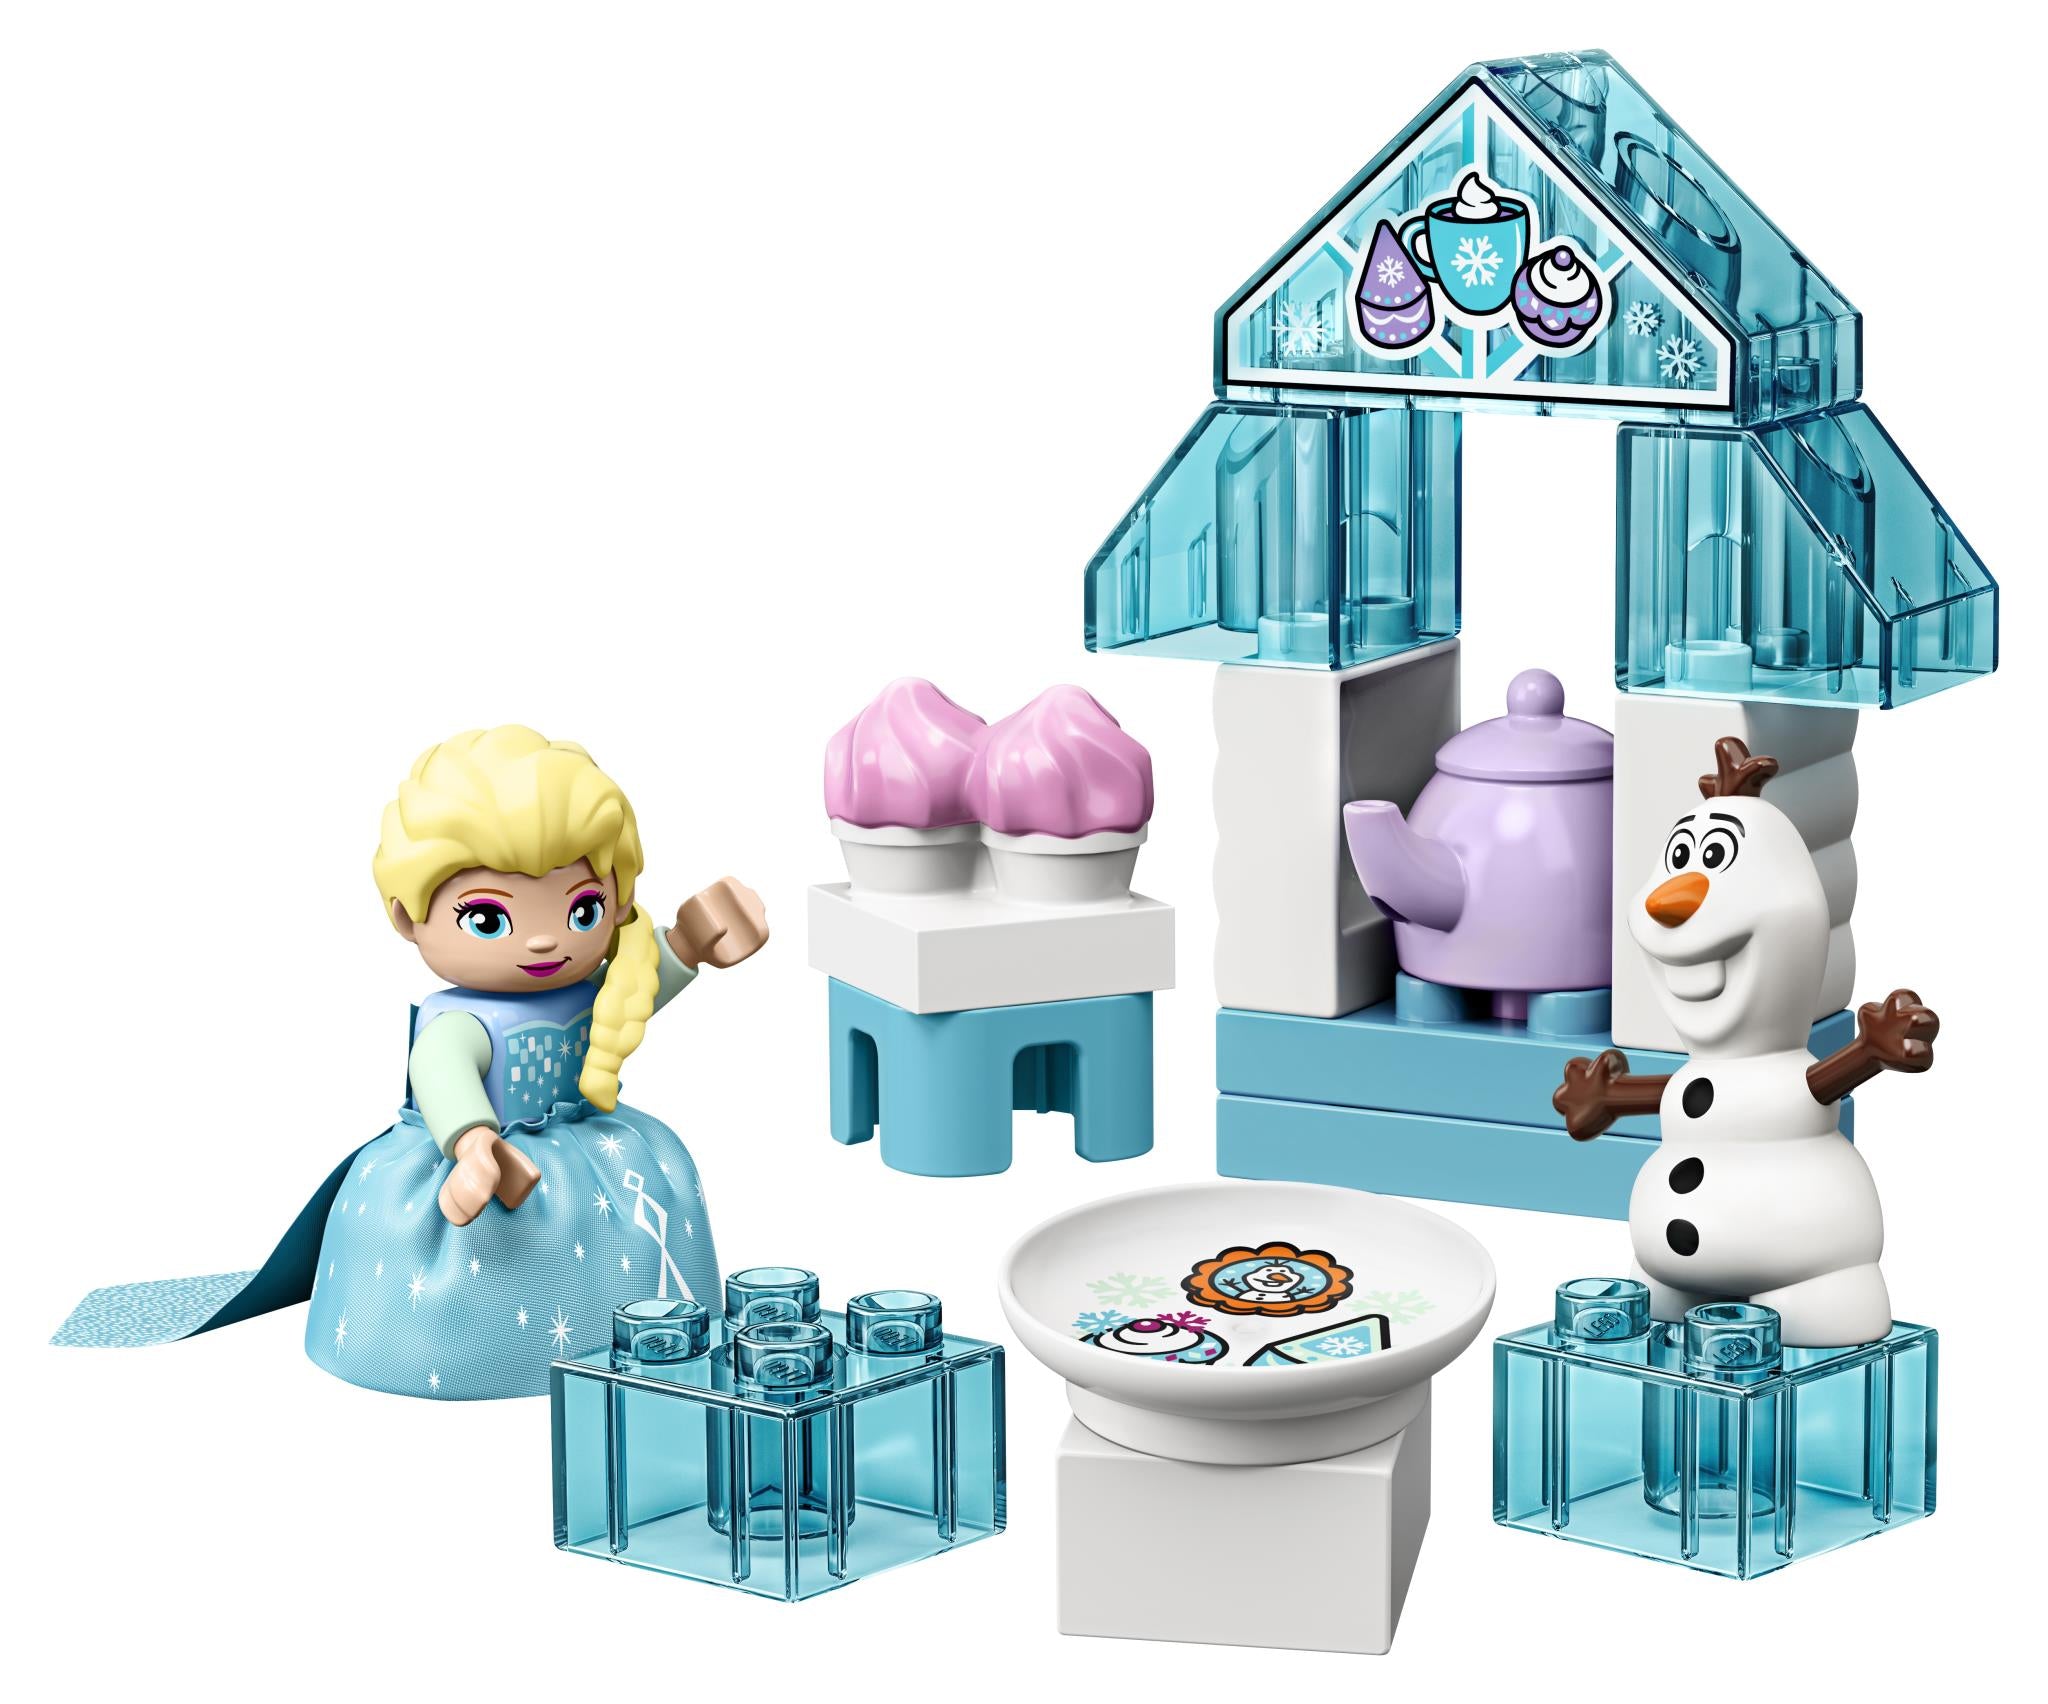 Elsa and Olafs Tea Party